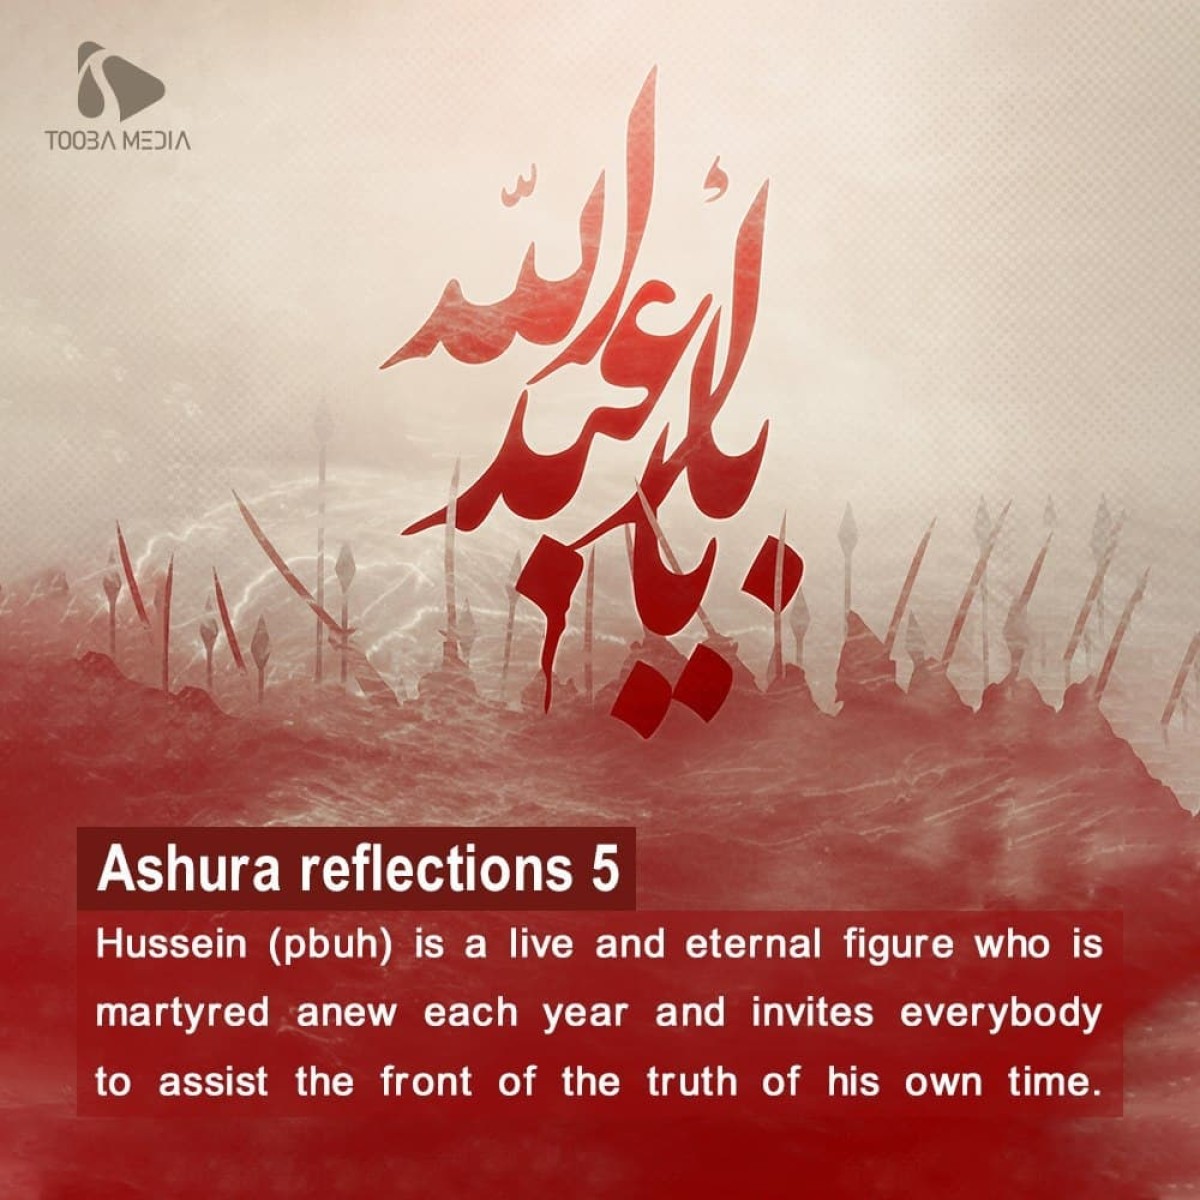 Ashura reflections 5